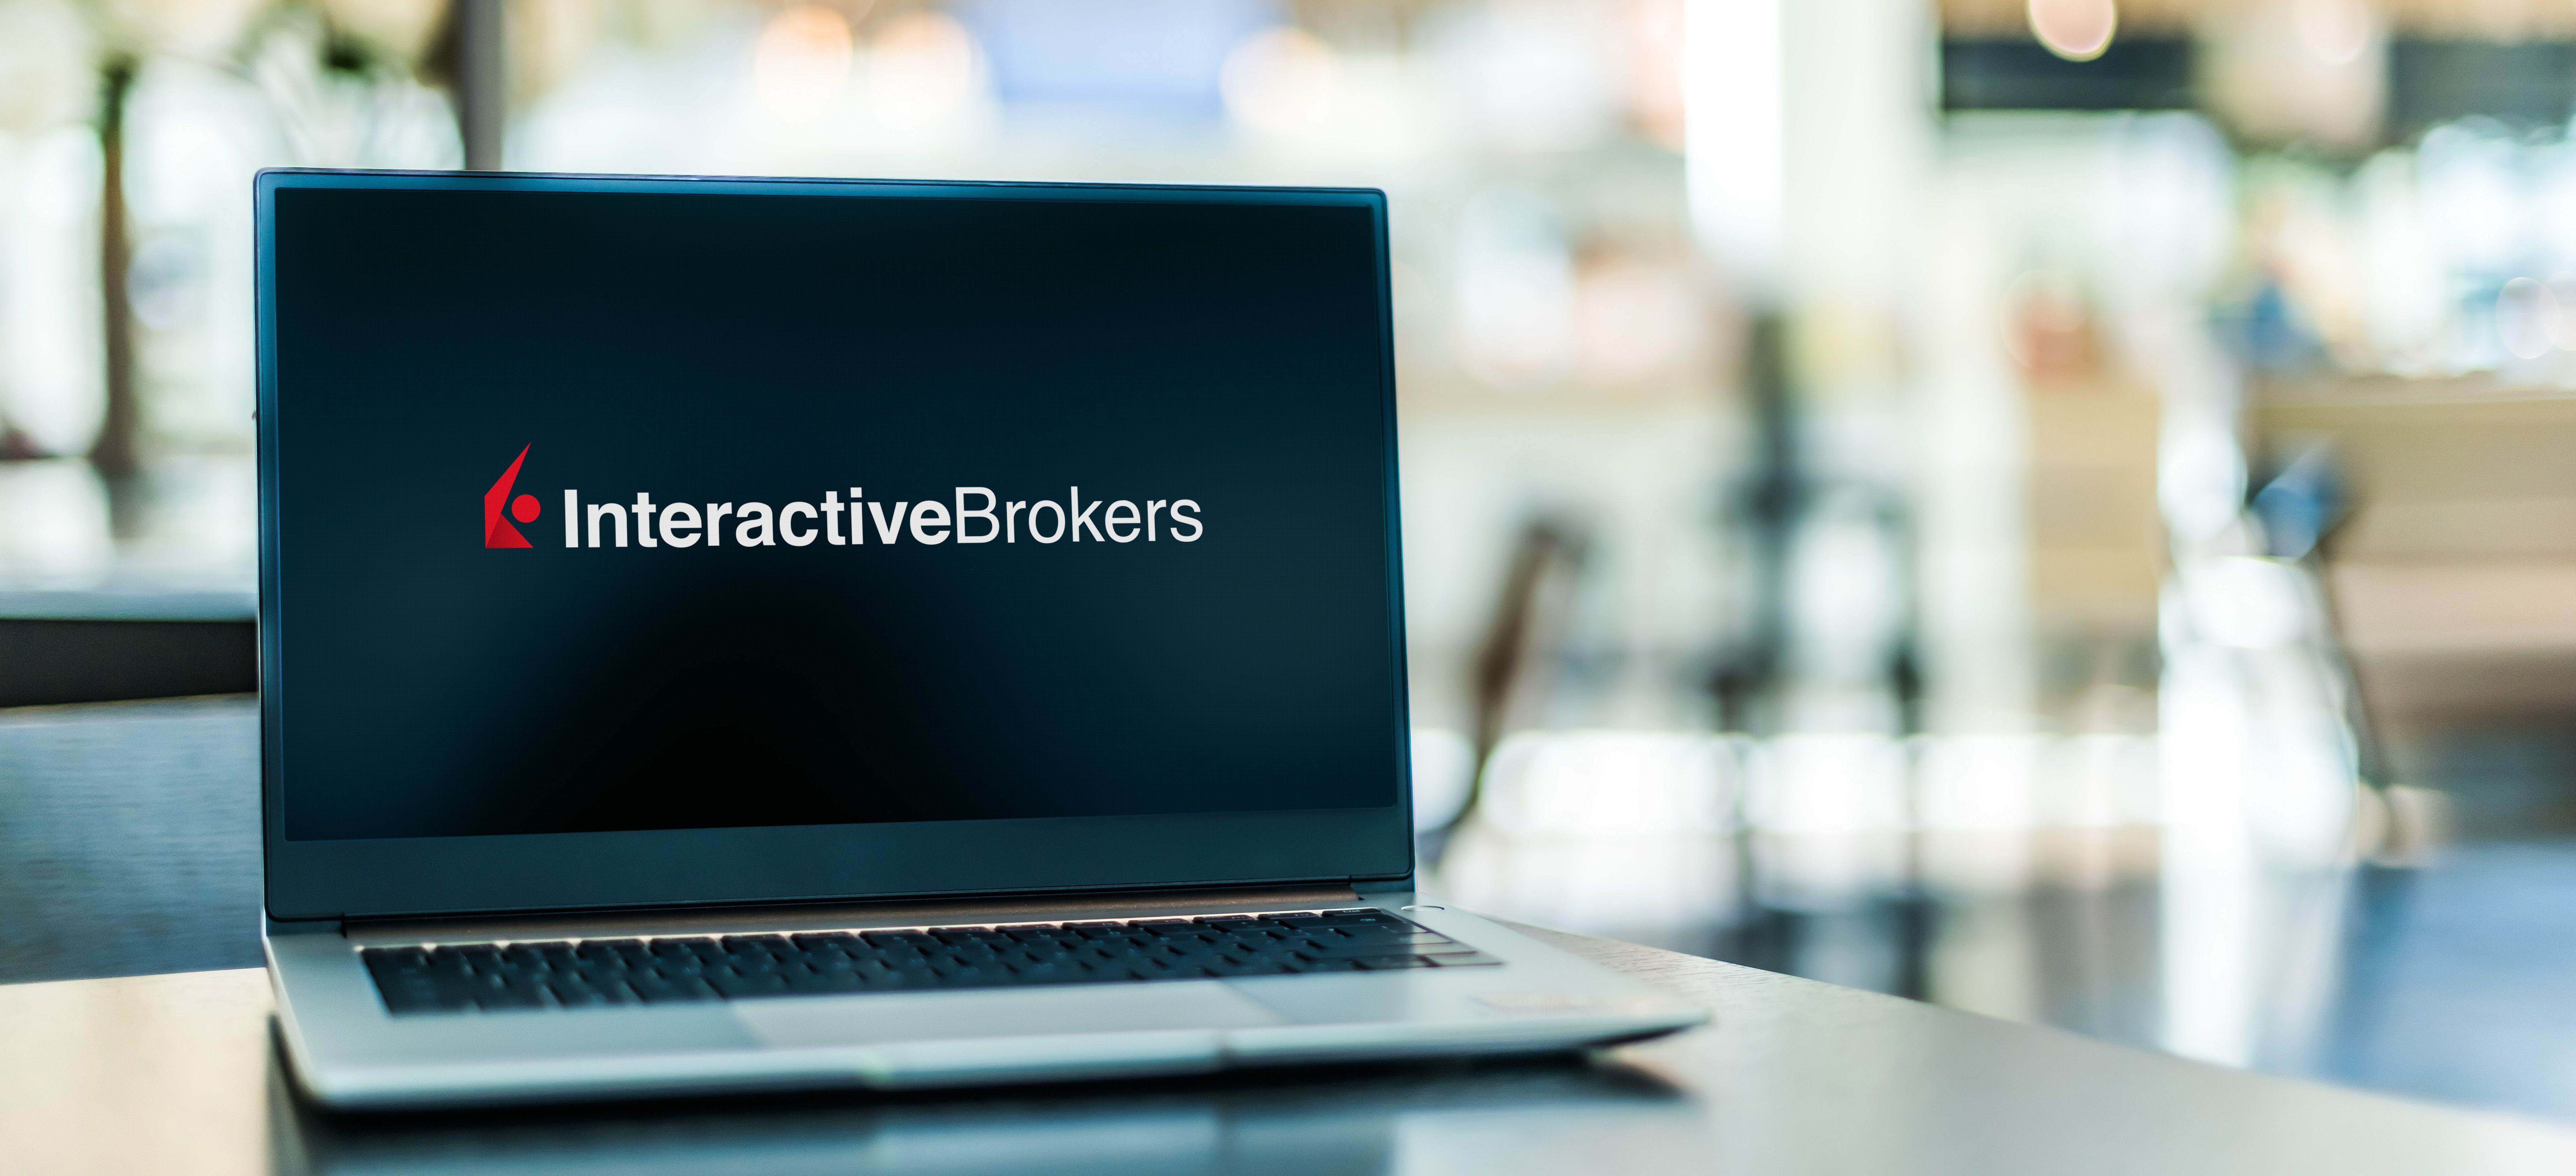 Laptop computer displaying logo of Interactive Brokers LLC (IB), an American multinational brokerage firm